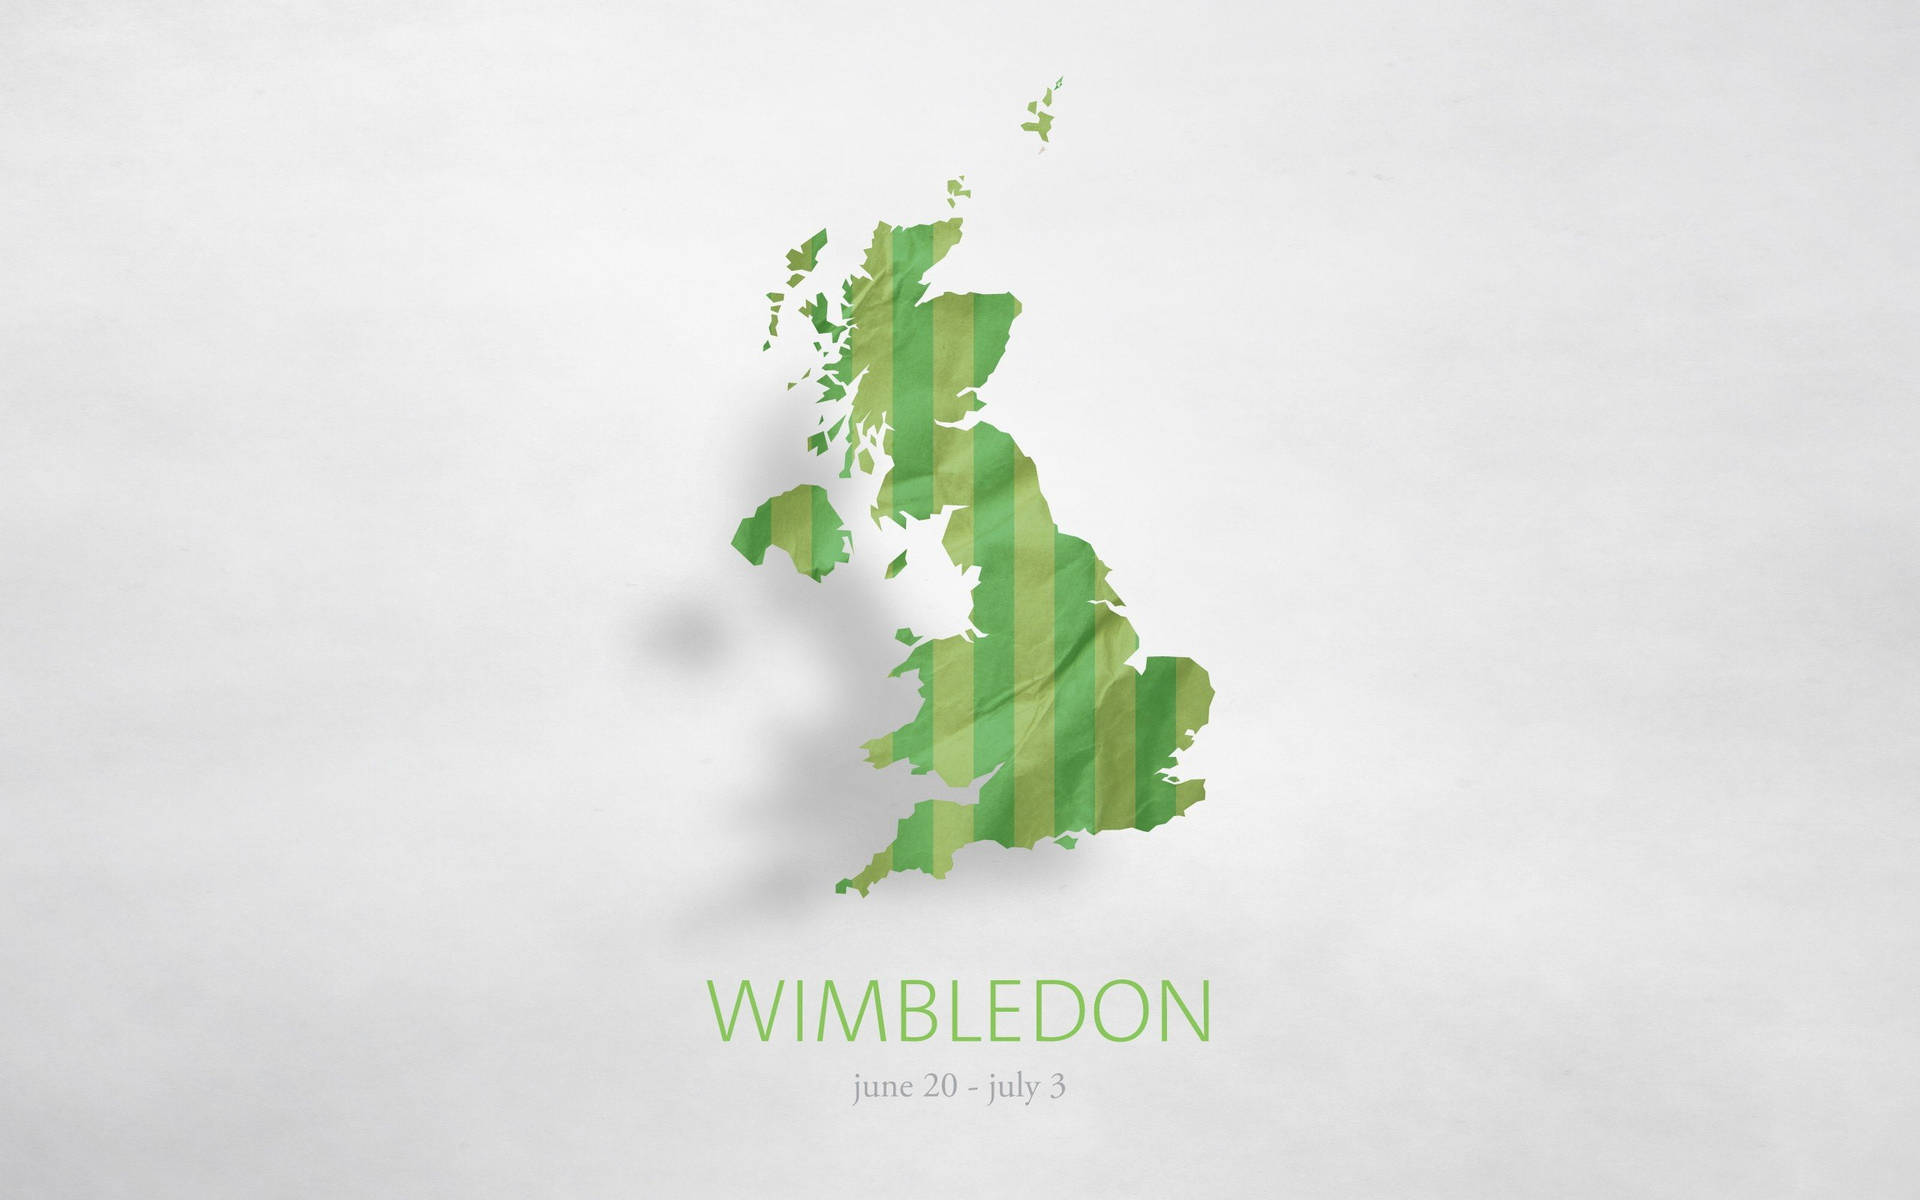 Wimbledonkarte Von England Wallpaper